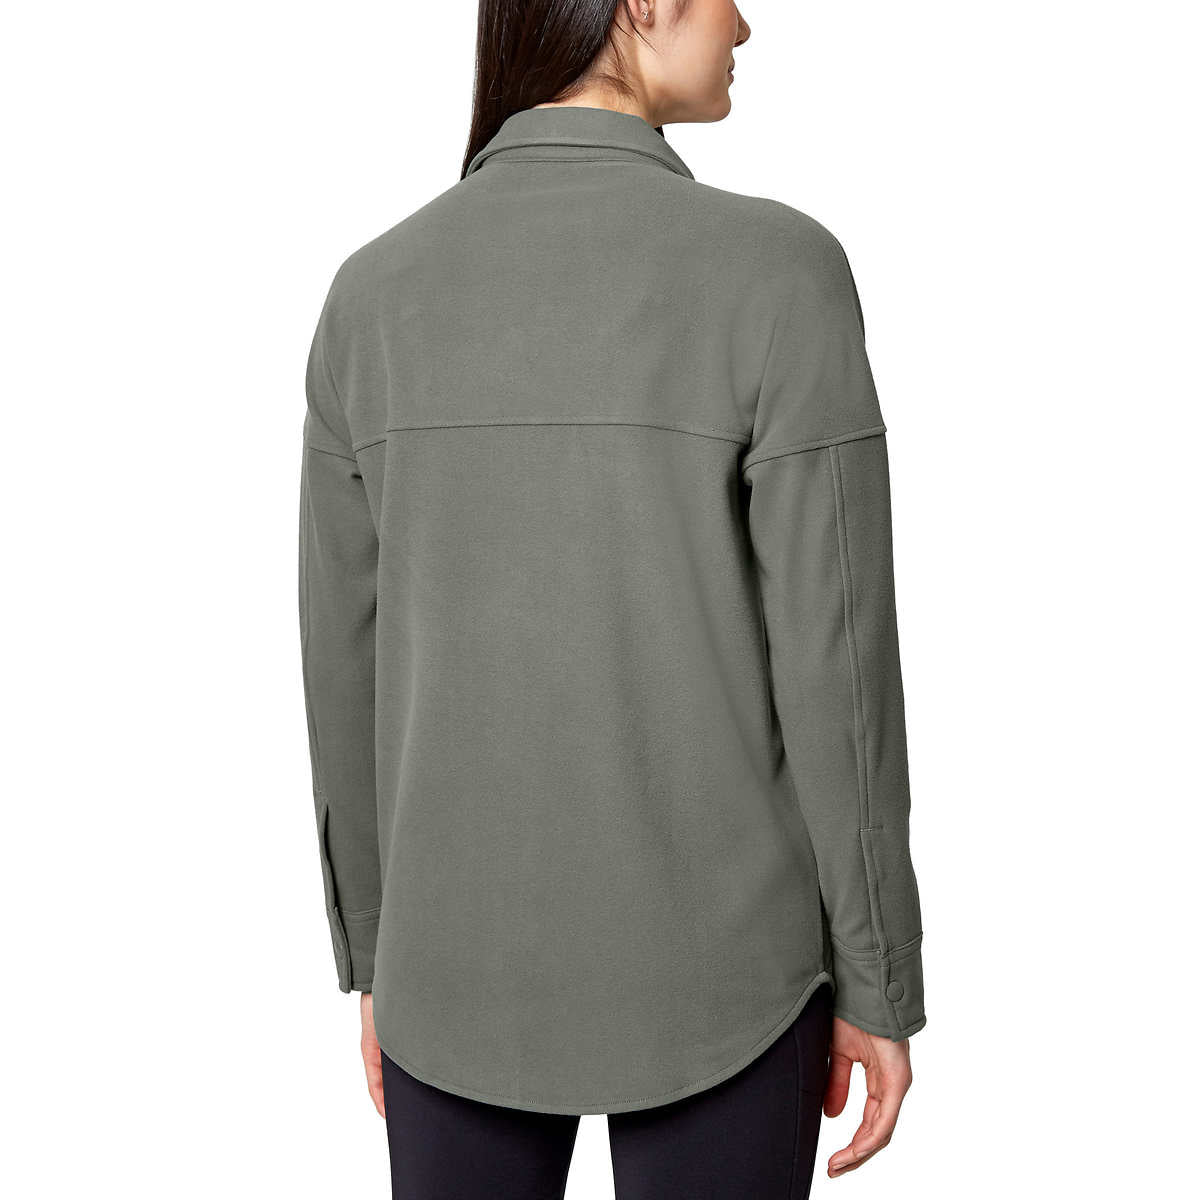 Mondetta Women's Soft Plush Cozy Moisture Wicking Snap Button Up Shirt